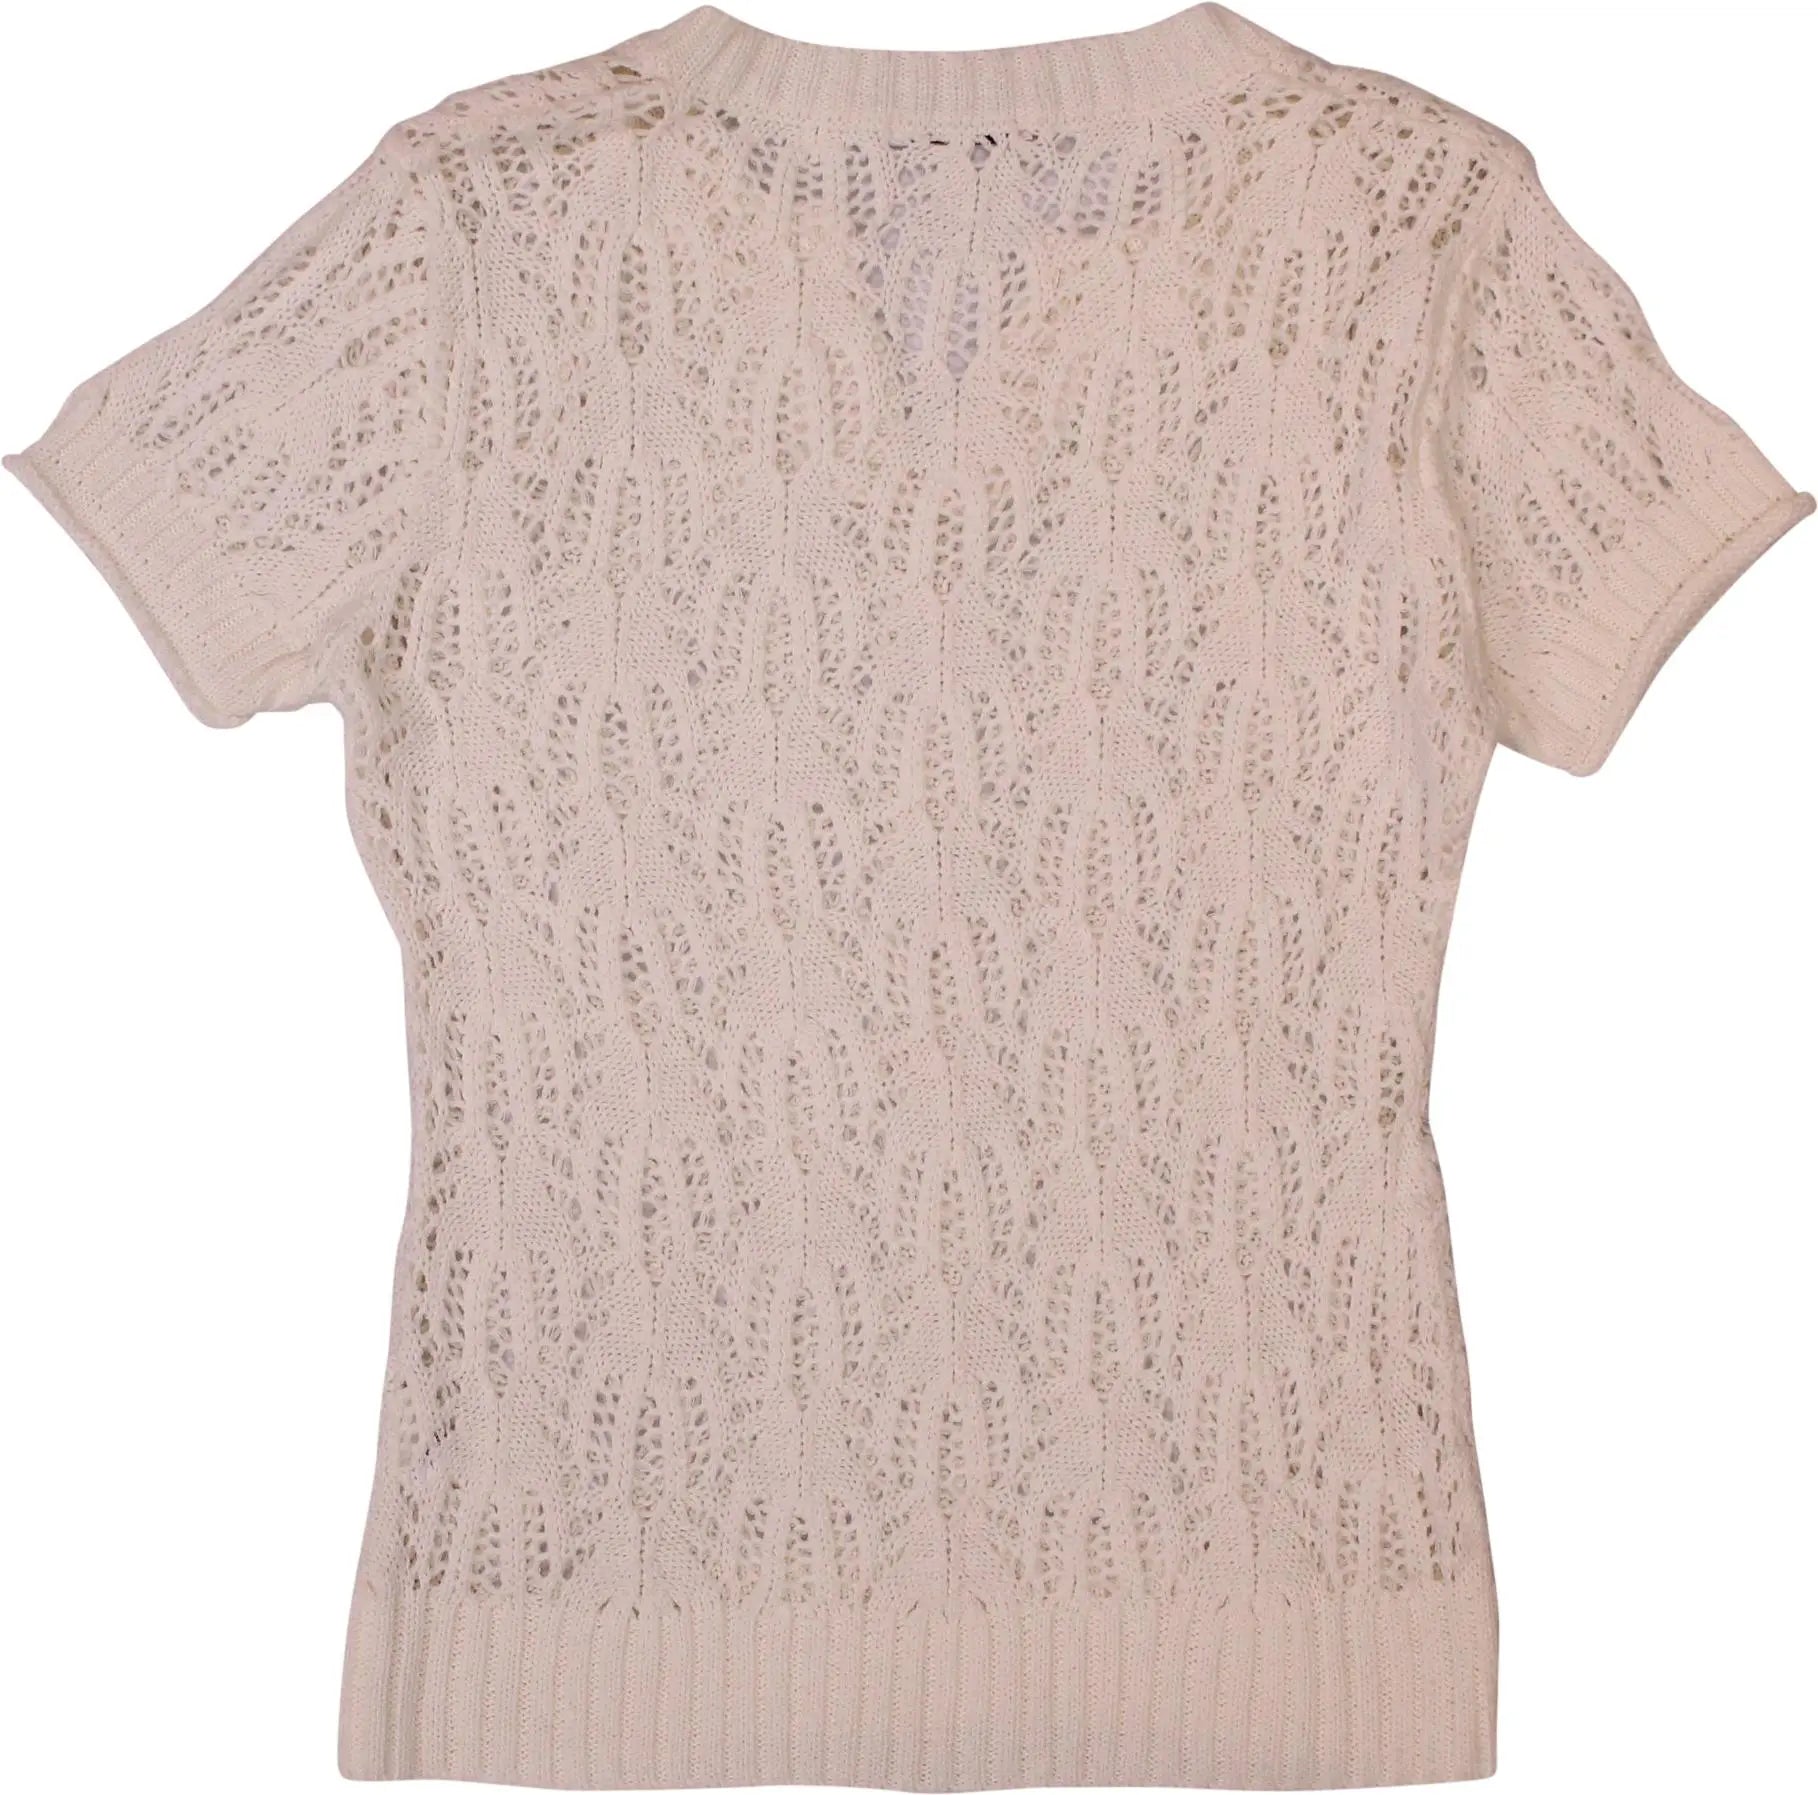 Miss Etam - Crochet T-Shirt- ThriftTale.com - Vintage and second handclothing